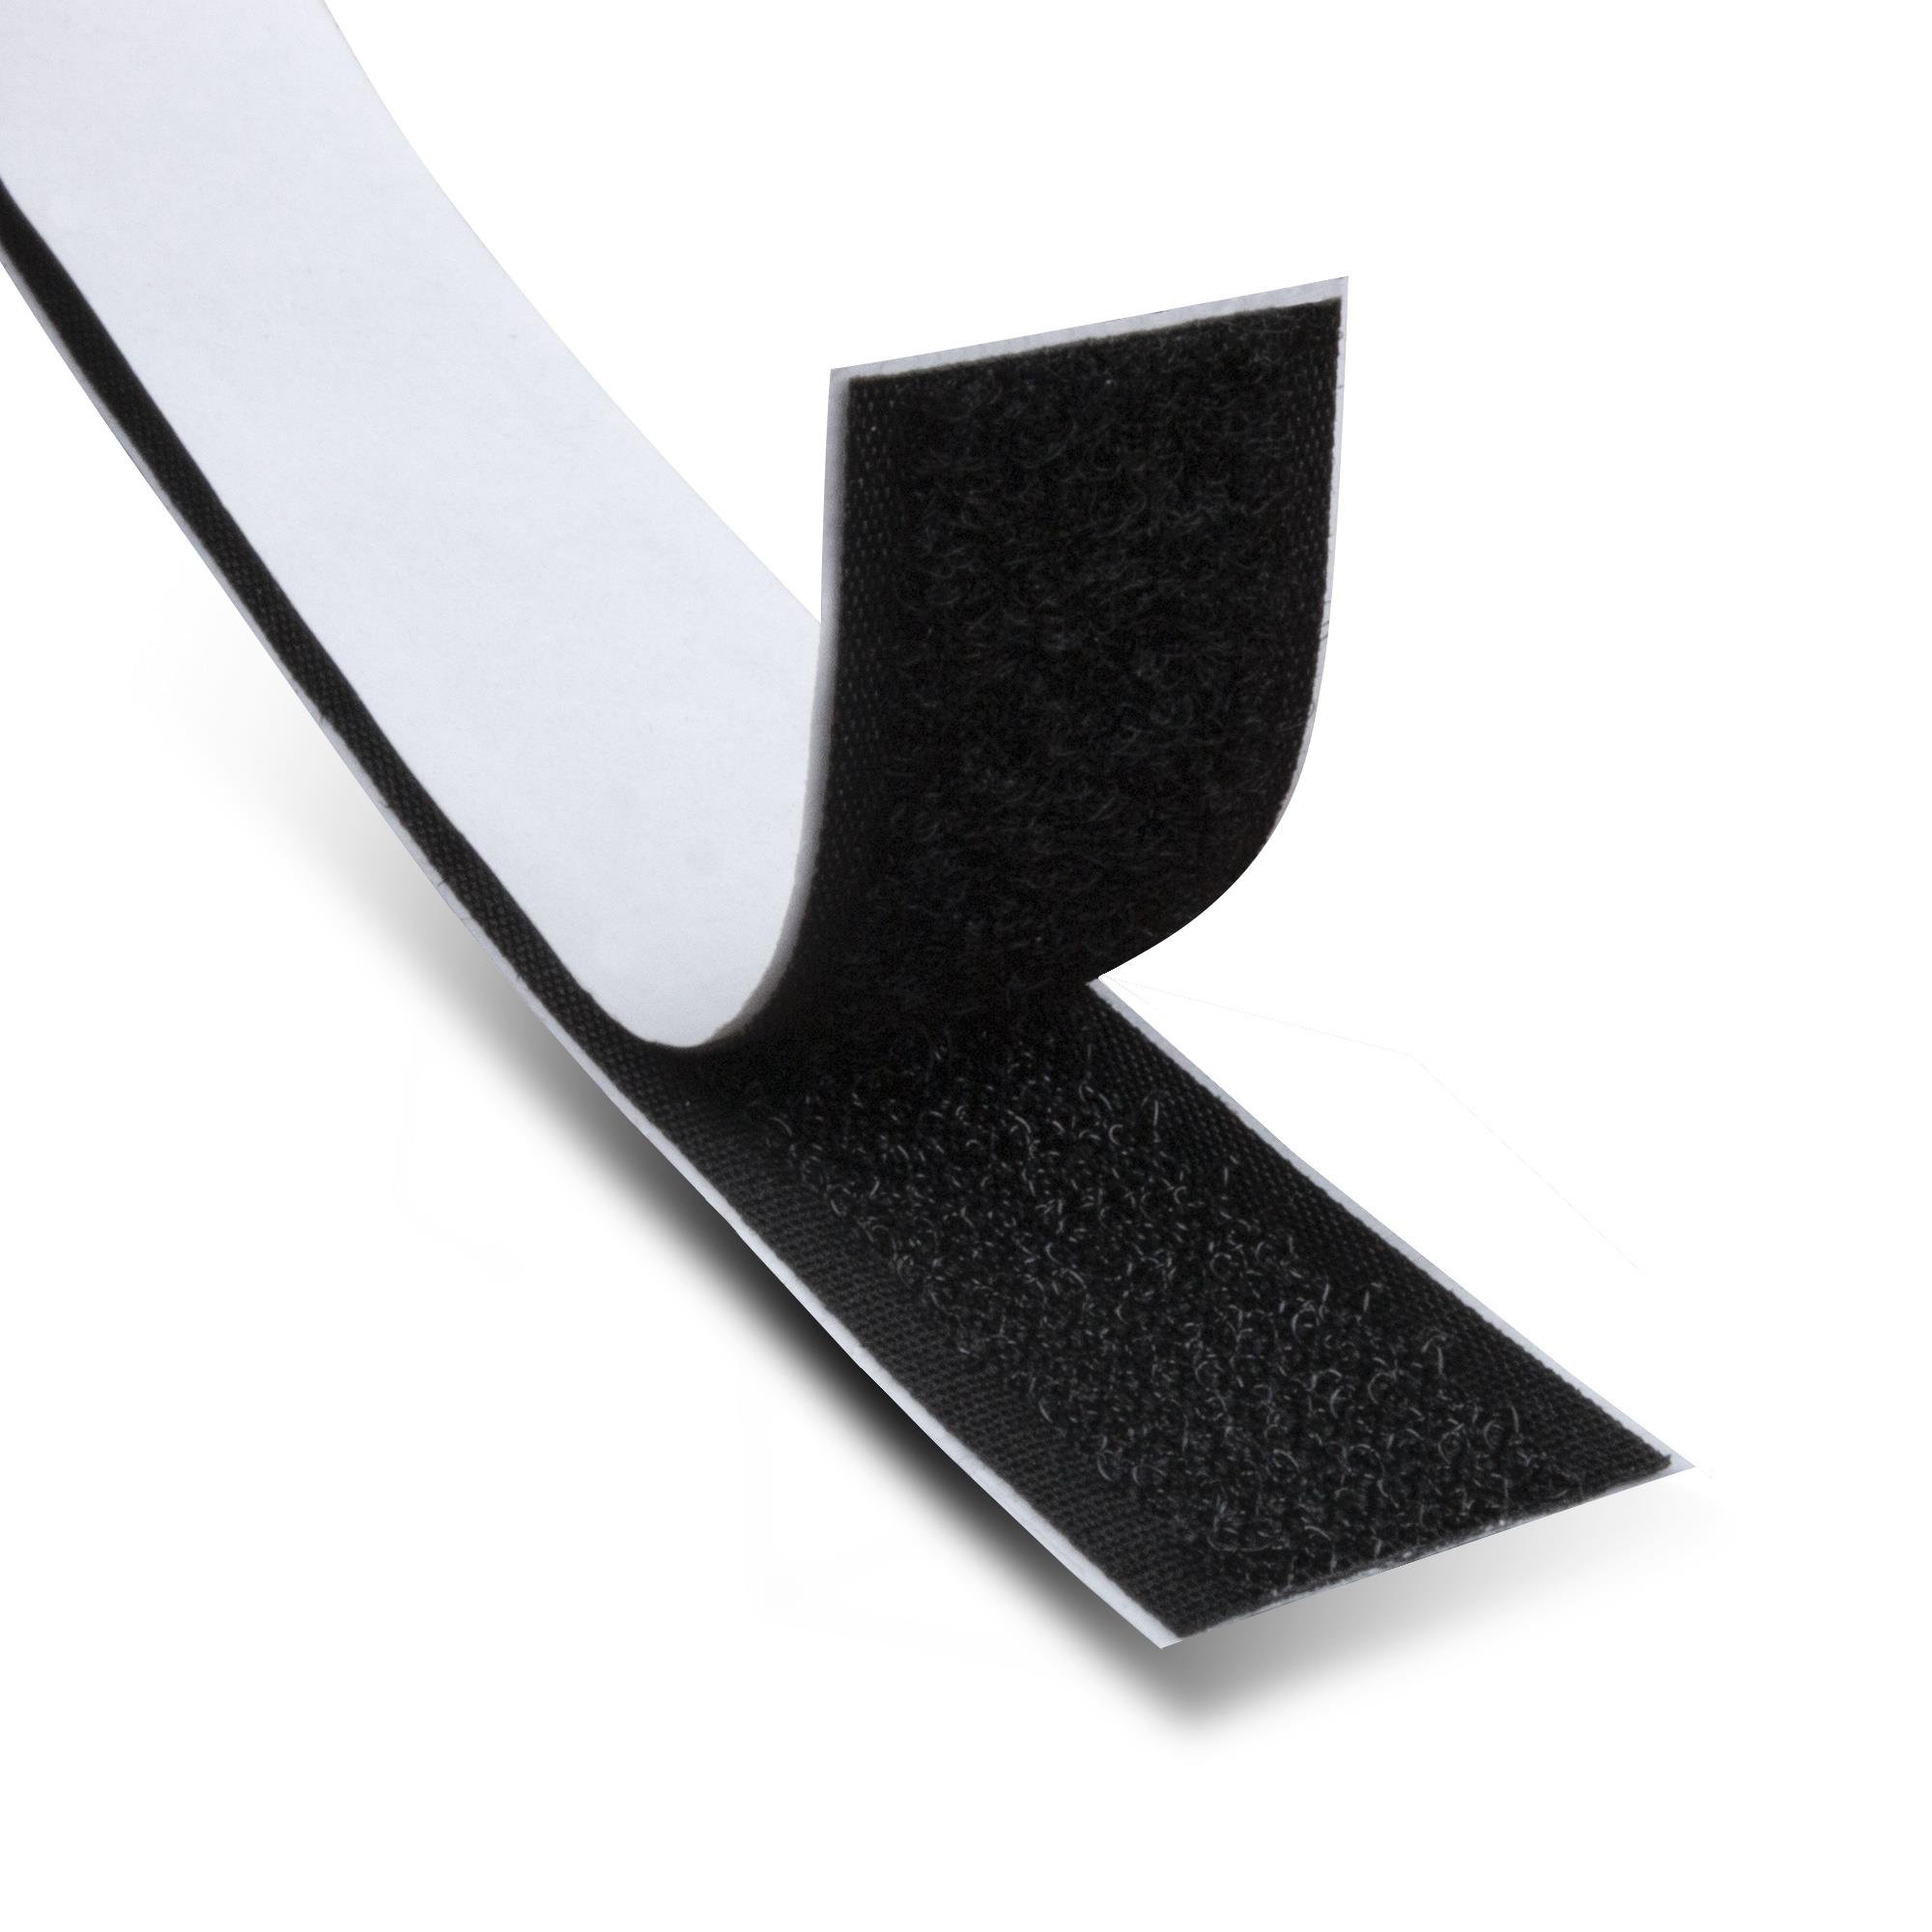 25M extra starkes selbstklebendes Klettband, doppelseitig klebend mit  Klettverschluss. 20mm breites selbstklebendes Klebepad